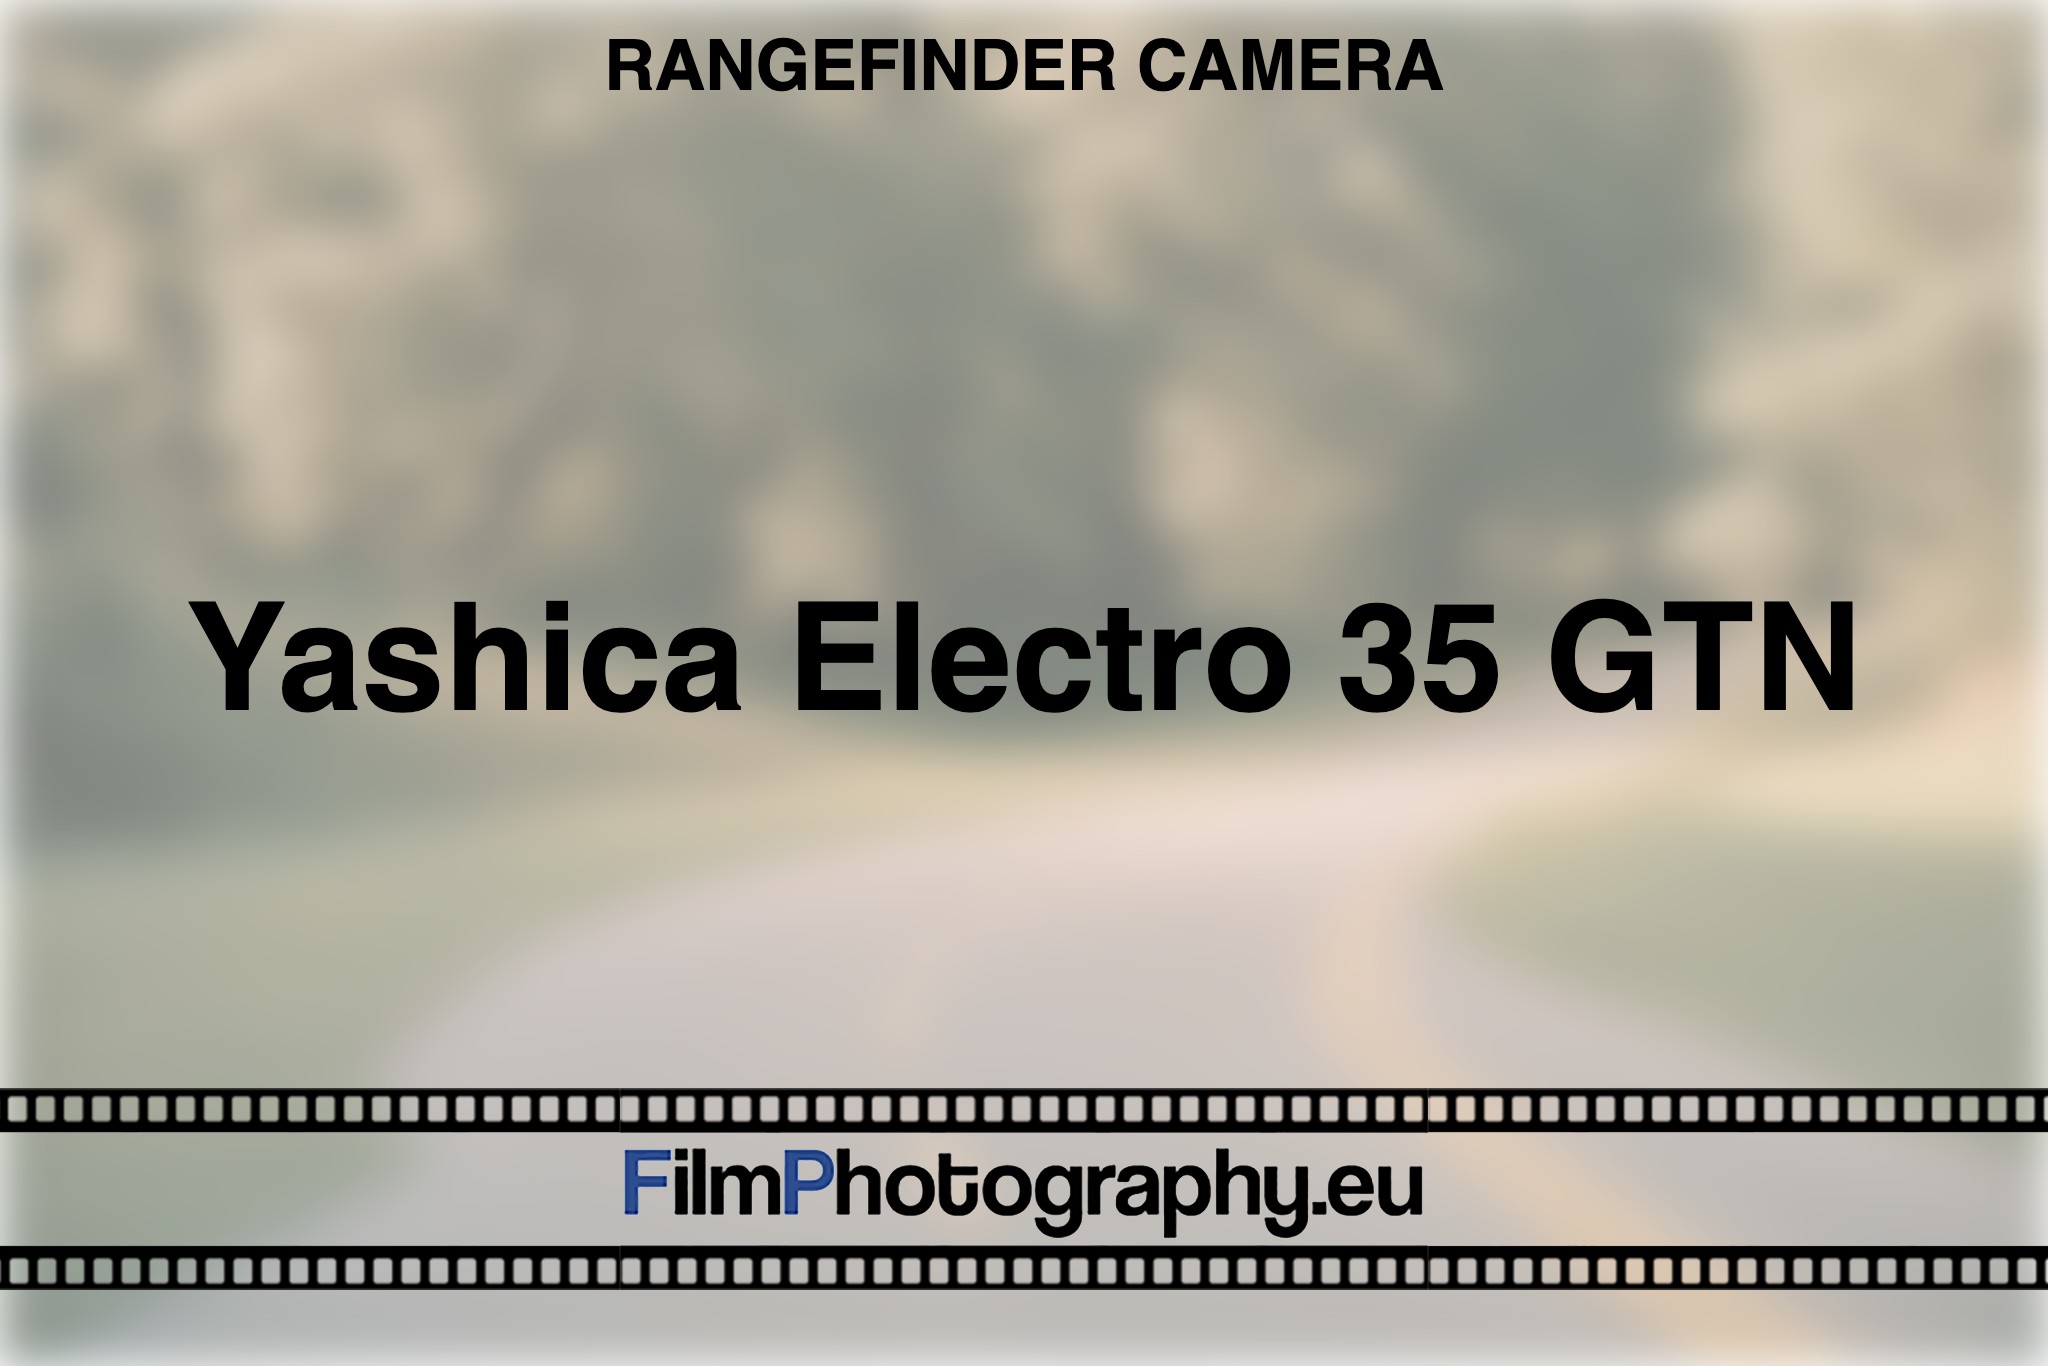 yashica-electro-35-gtn-rangefinder-camera-bnv